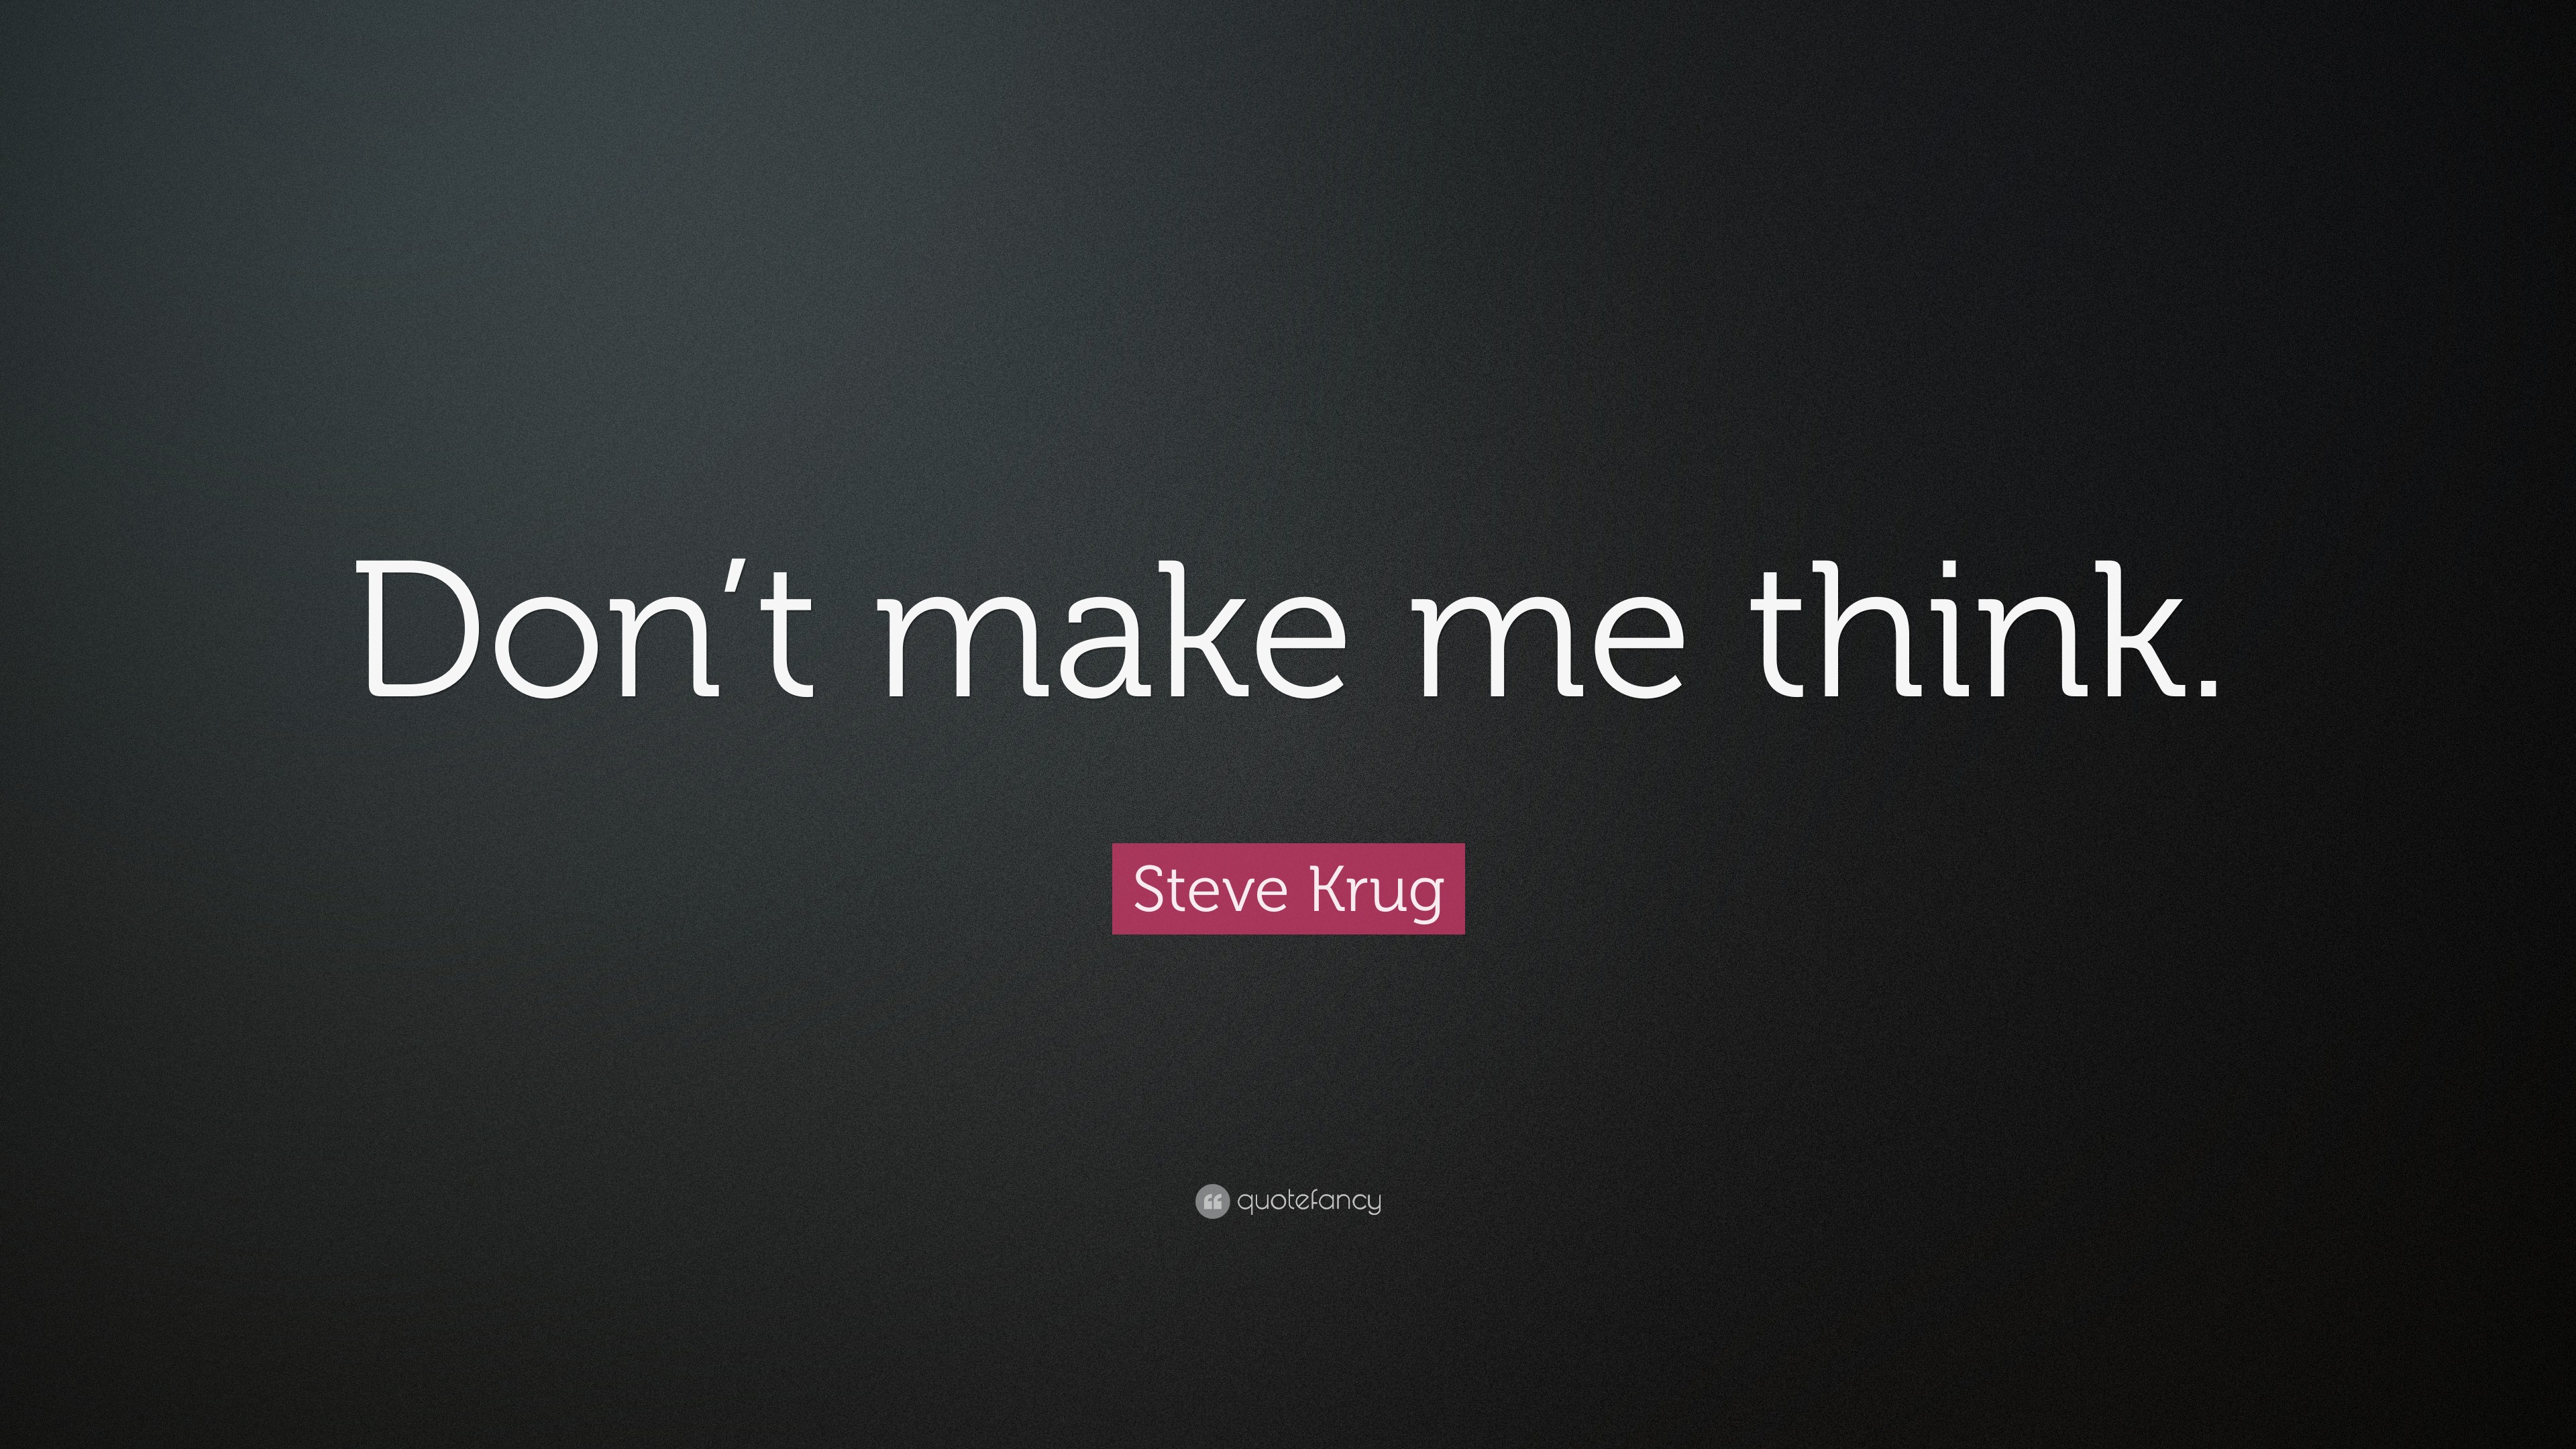 Steve Krug Quote: “Don't make me think.”